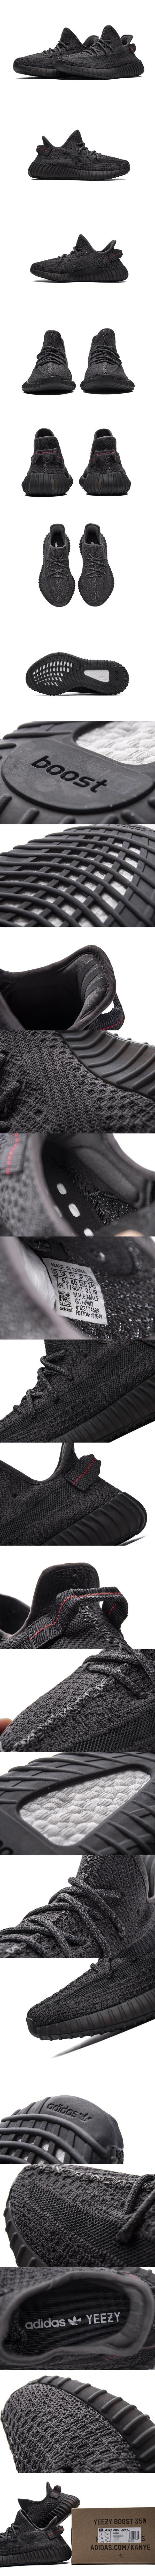 Adidas Yeezy Boost 350 V2 Black FU9013 イージーブースト350